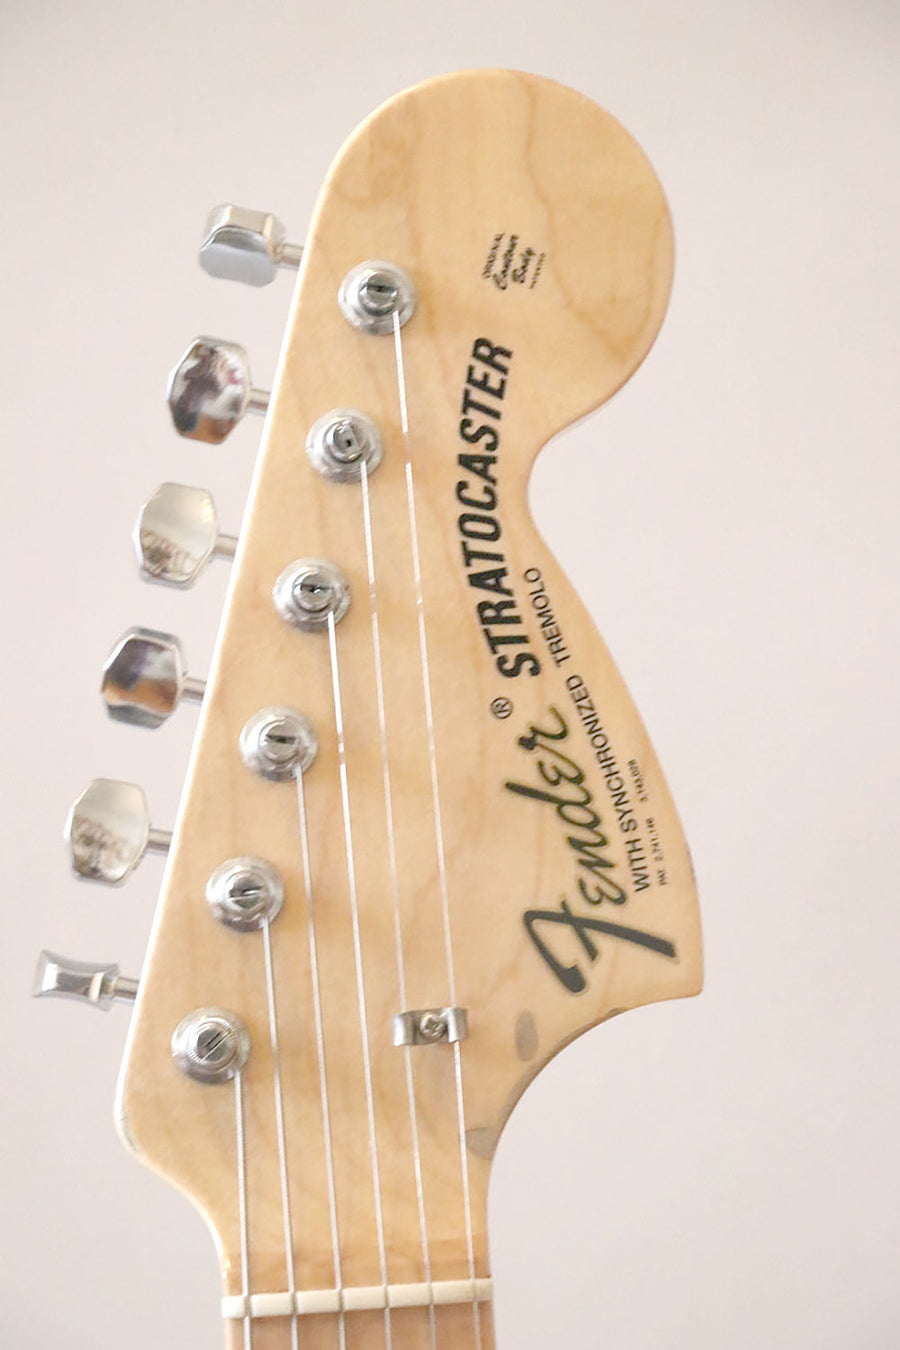 Electric Guitars For Sale, Squier Stratocaster Jimi Hendrix